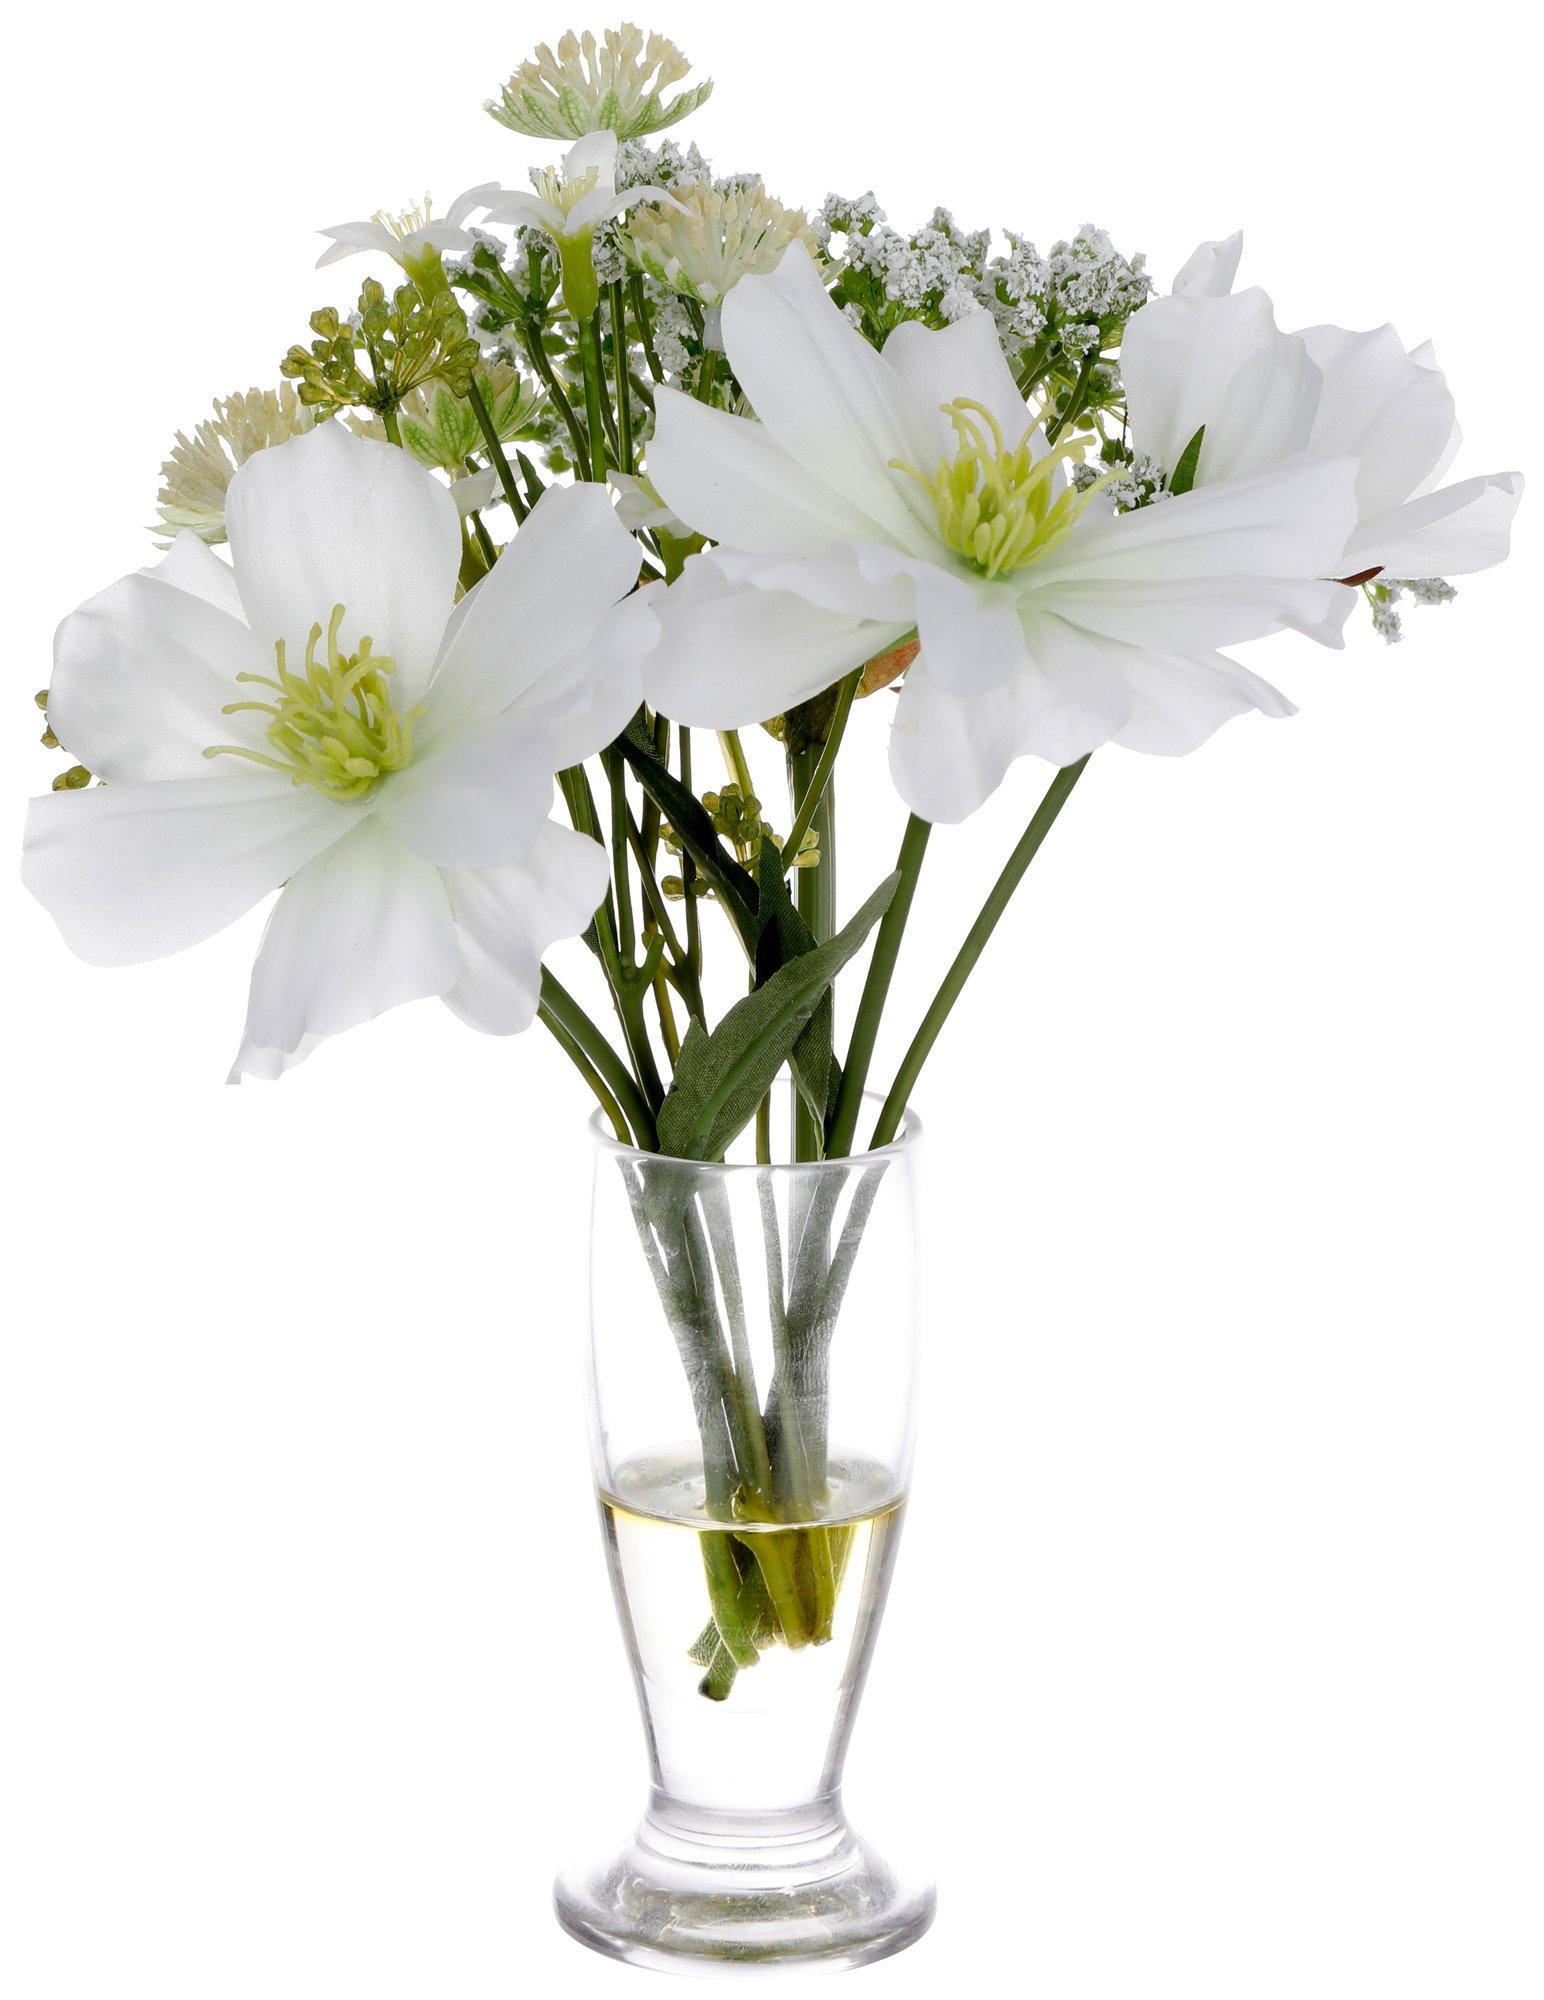 6 in Faux Floral Arrangement in Glass Vase